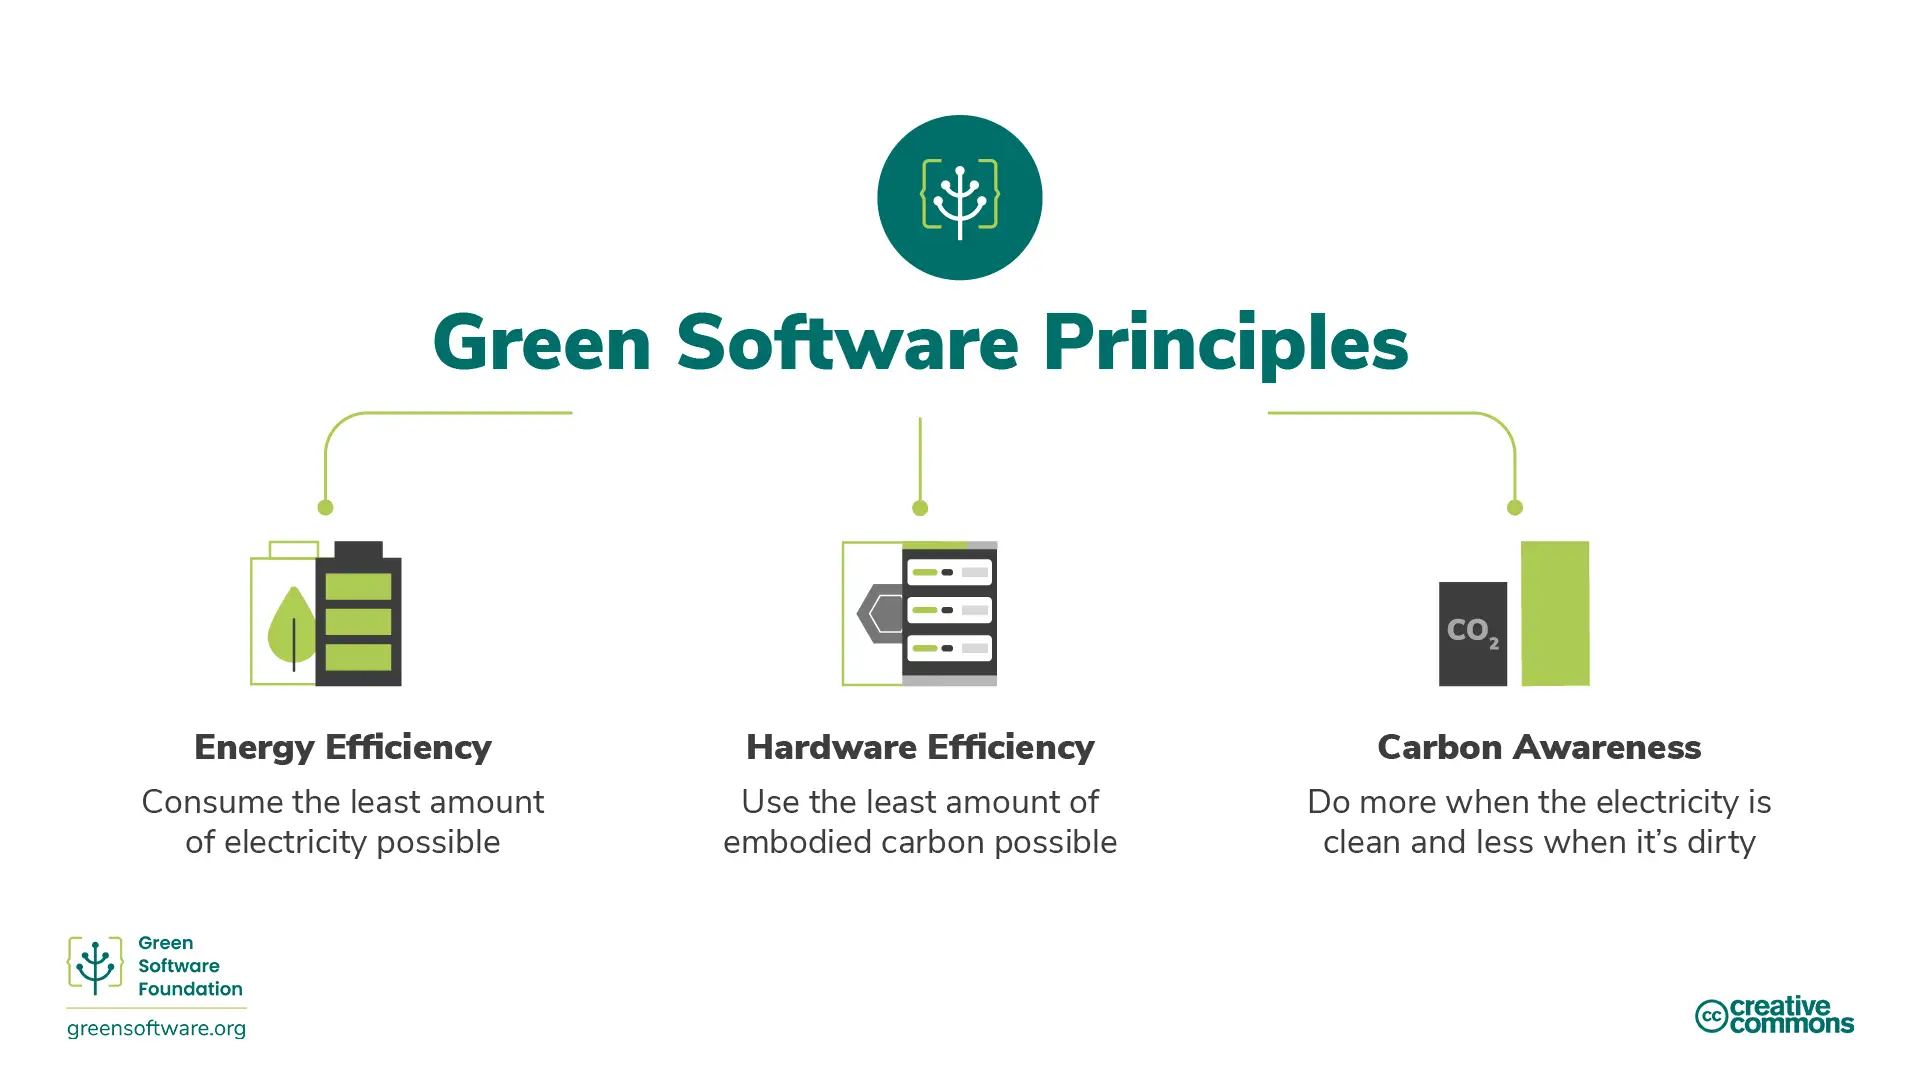 Green Software Foundation - Energieprinzipien